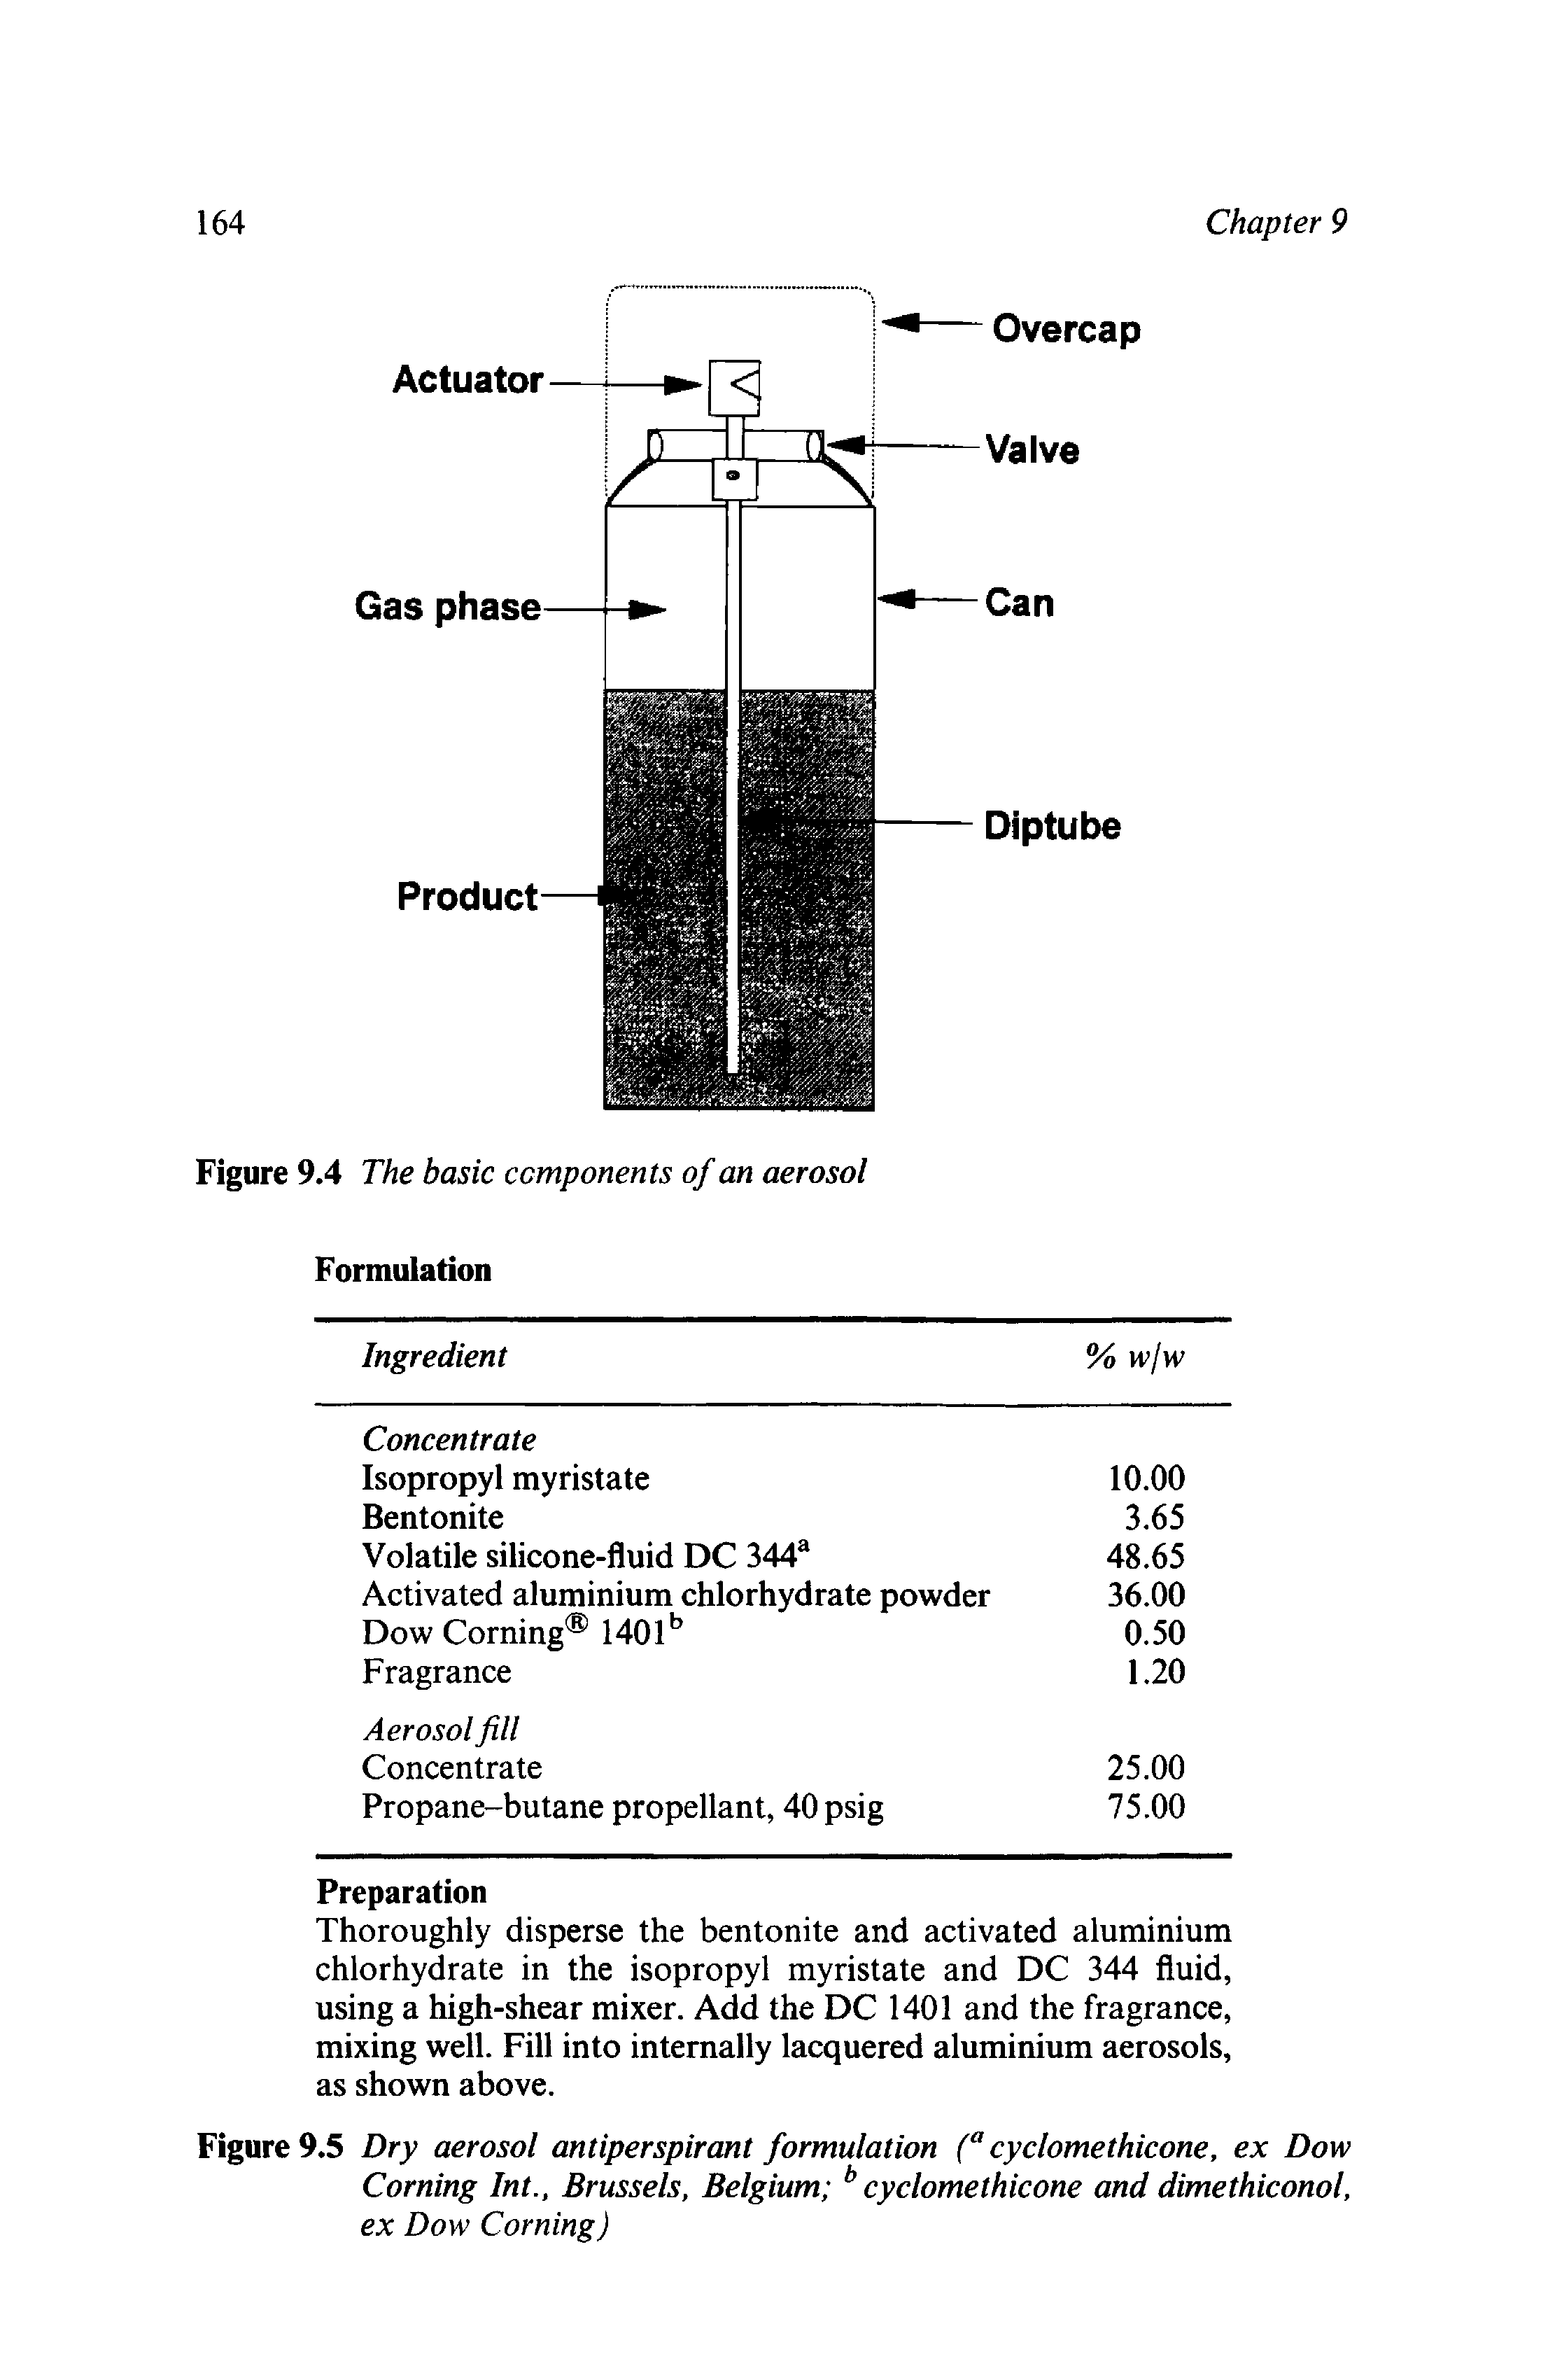 Figure 9.5 Dry aerosol antiperspirant formulation (a cyclomethicone, ex Dow Corning Int., Brussels, Belgium b cyclomethicone and dimethiconol, ex Dow Corning)...